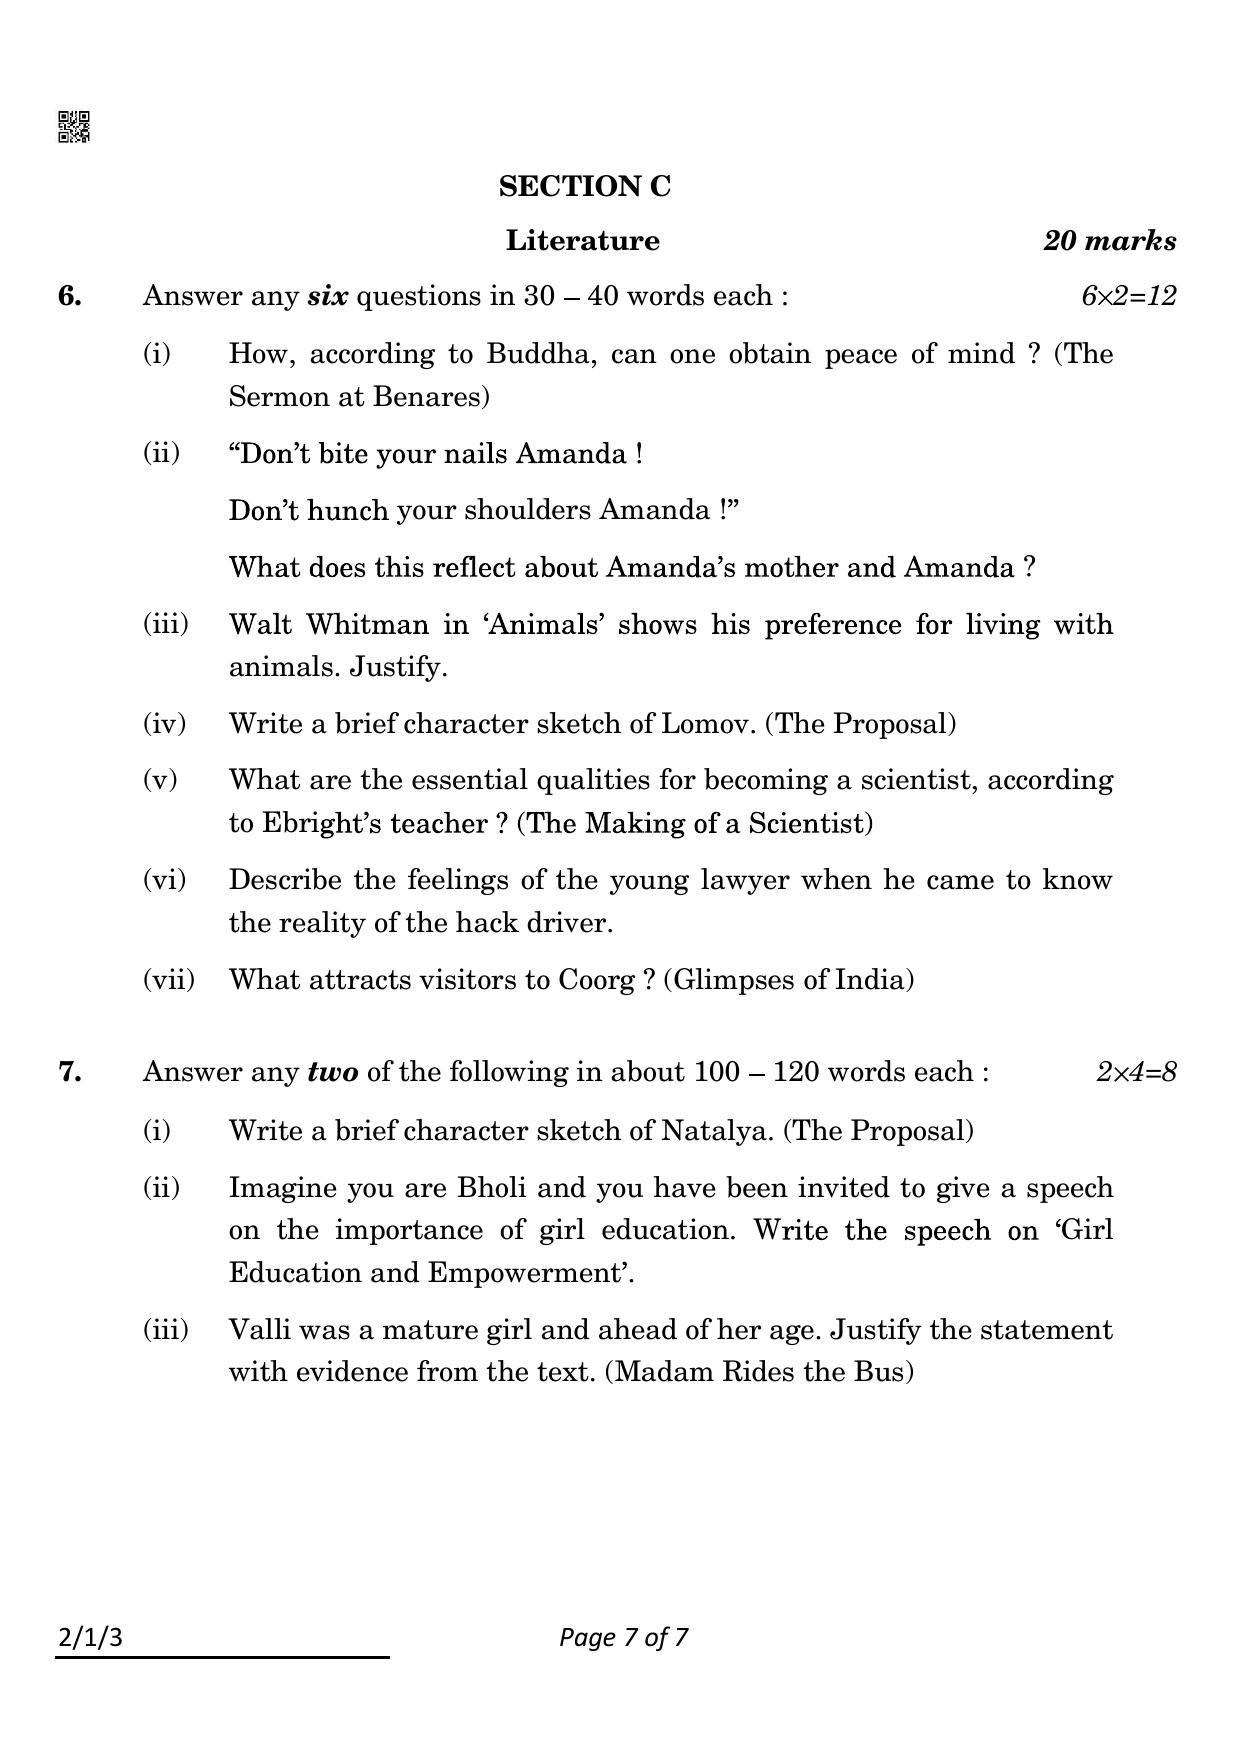 CBSE Class 10 2-1-3 English L & L 2022 Question Paper - Page 7